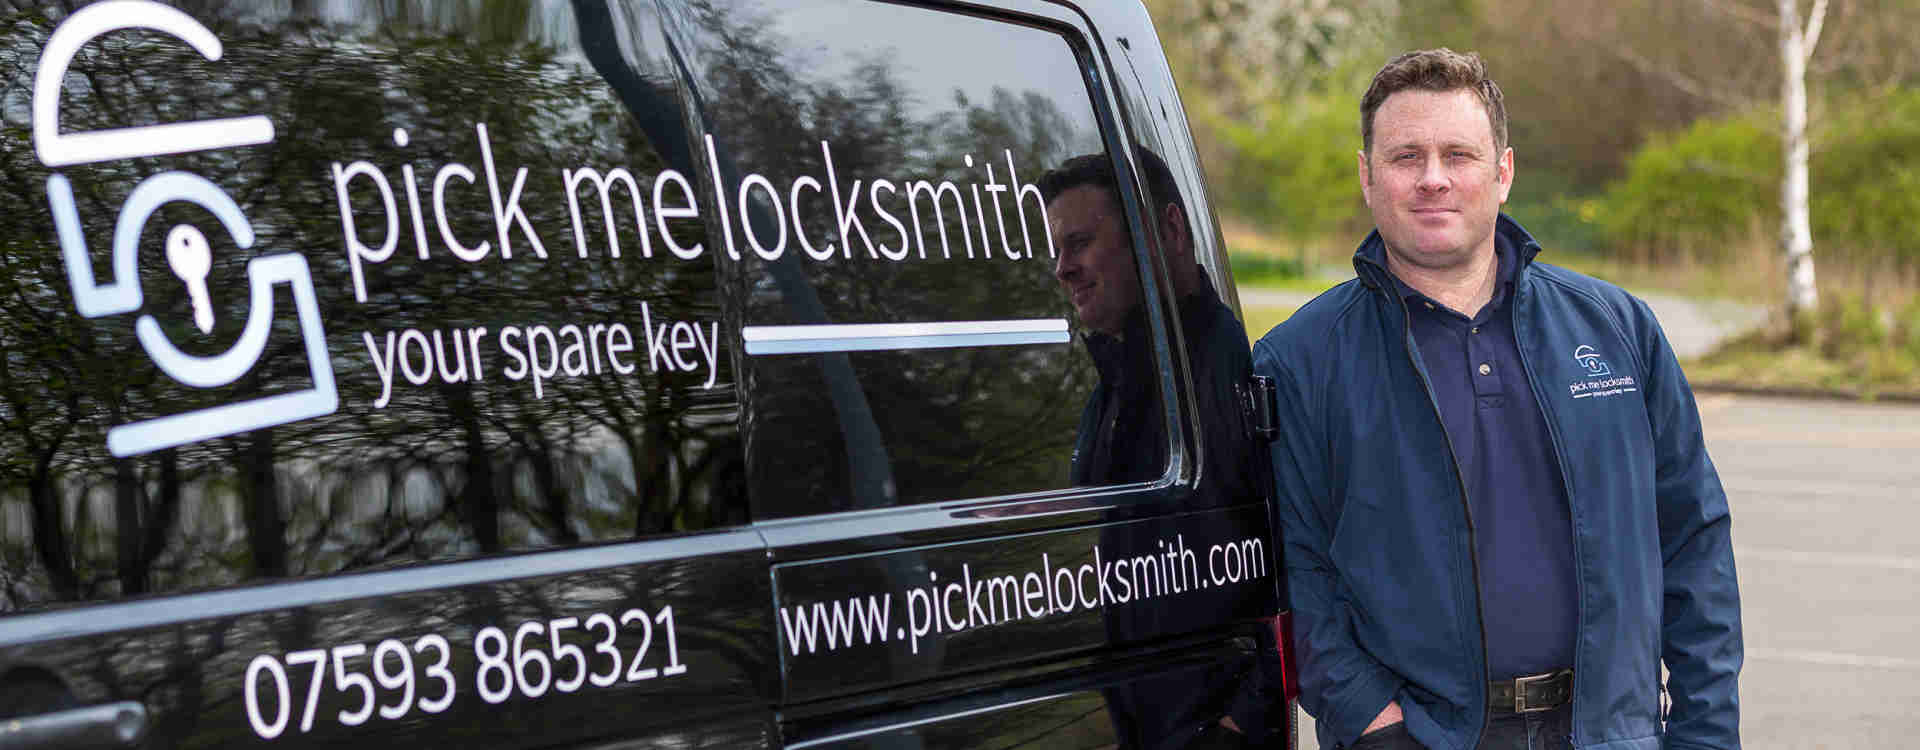 Mark Santi Master Locksmith Derby by His locksmiths van